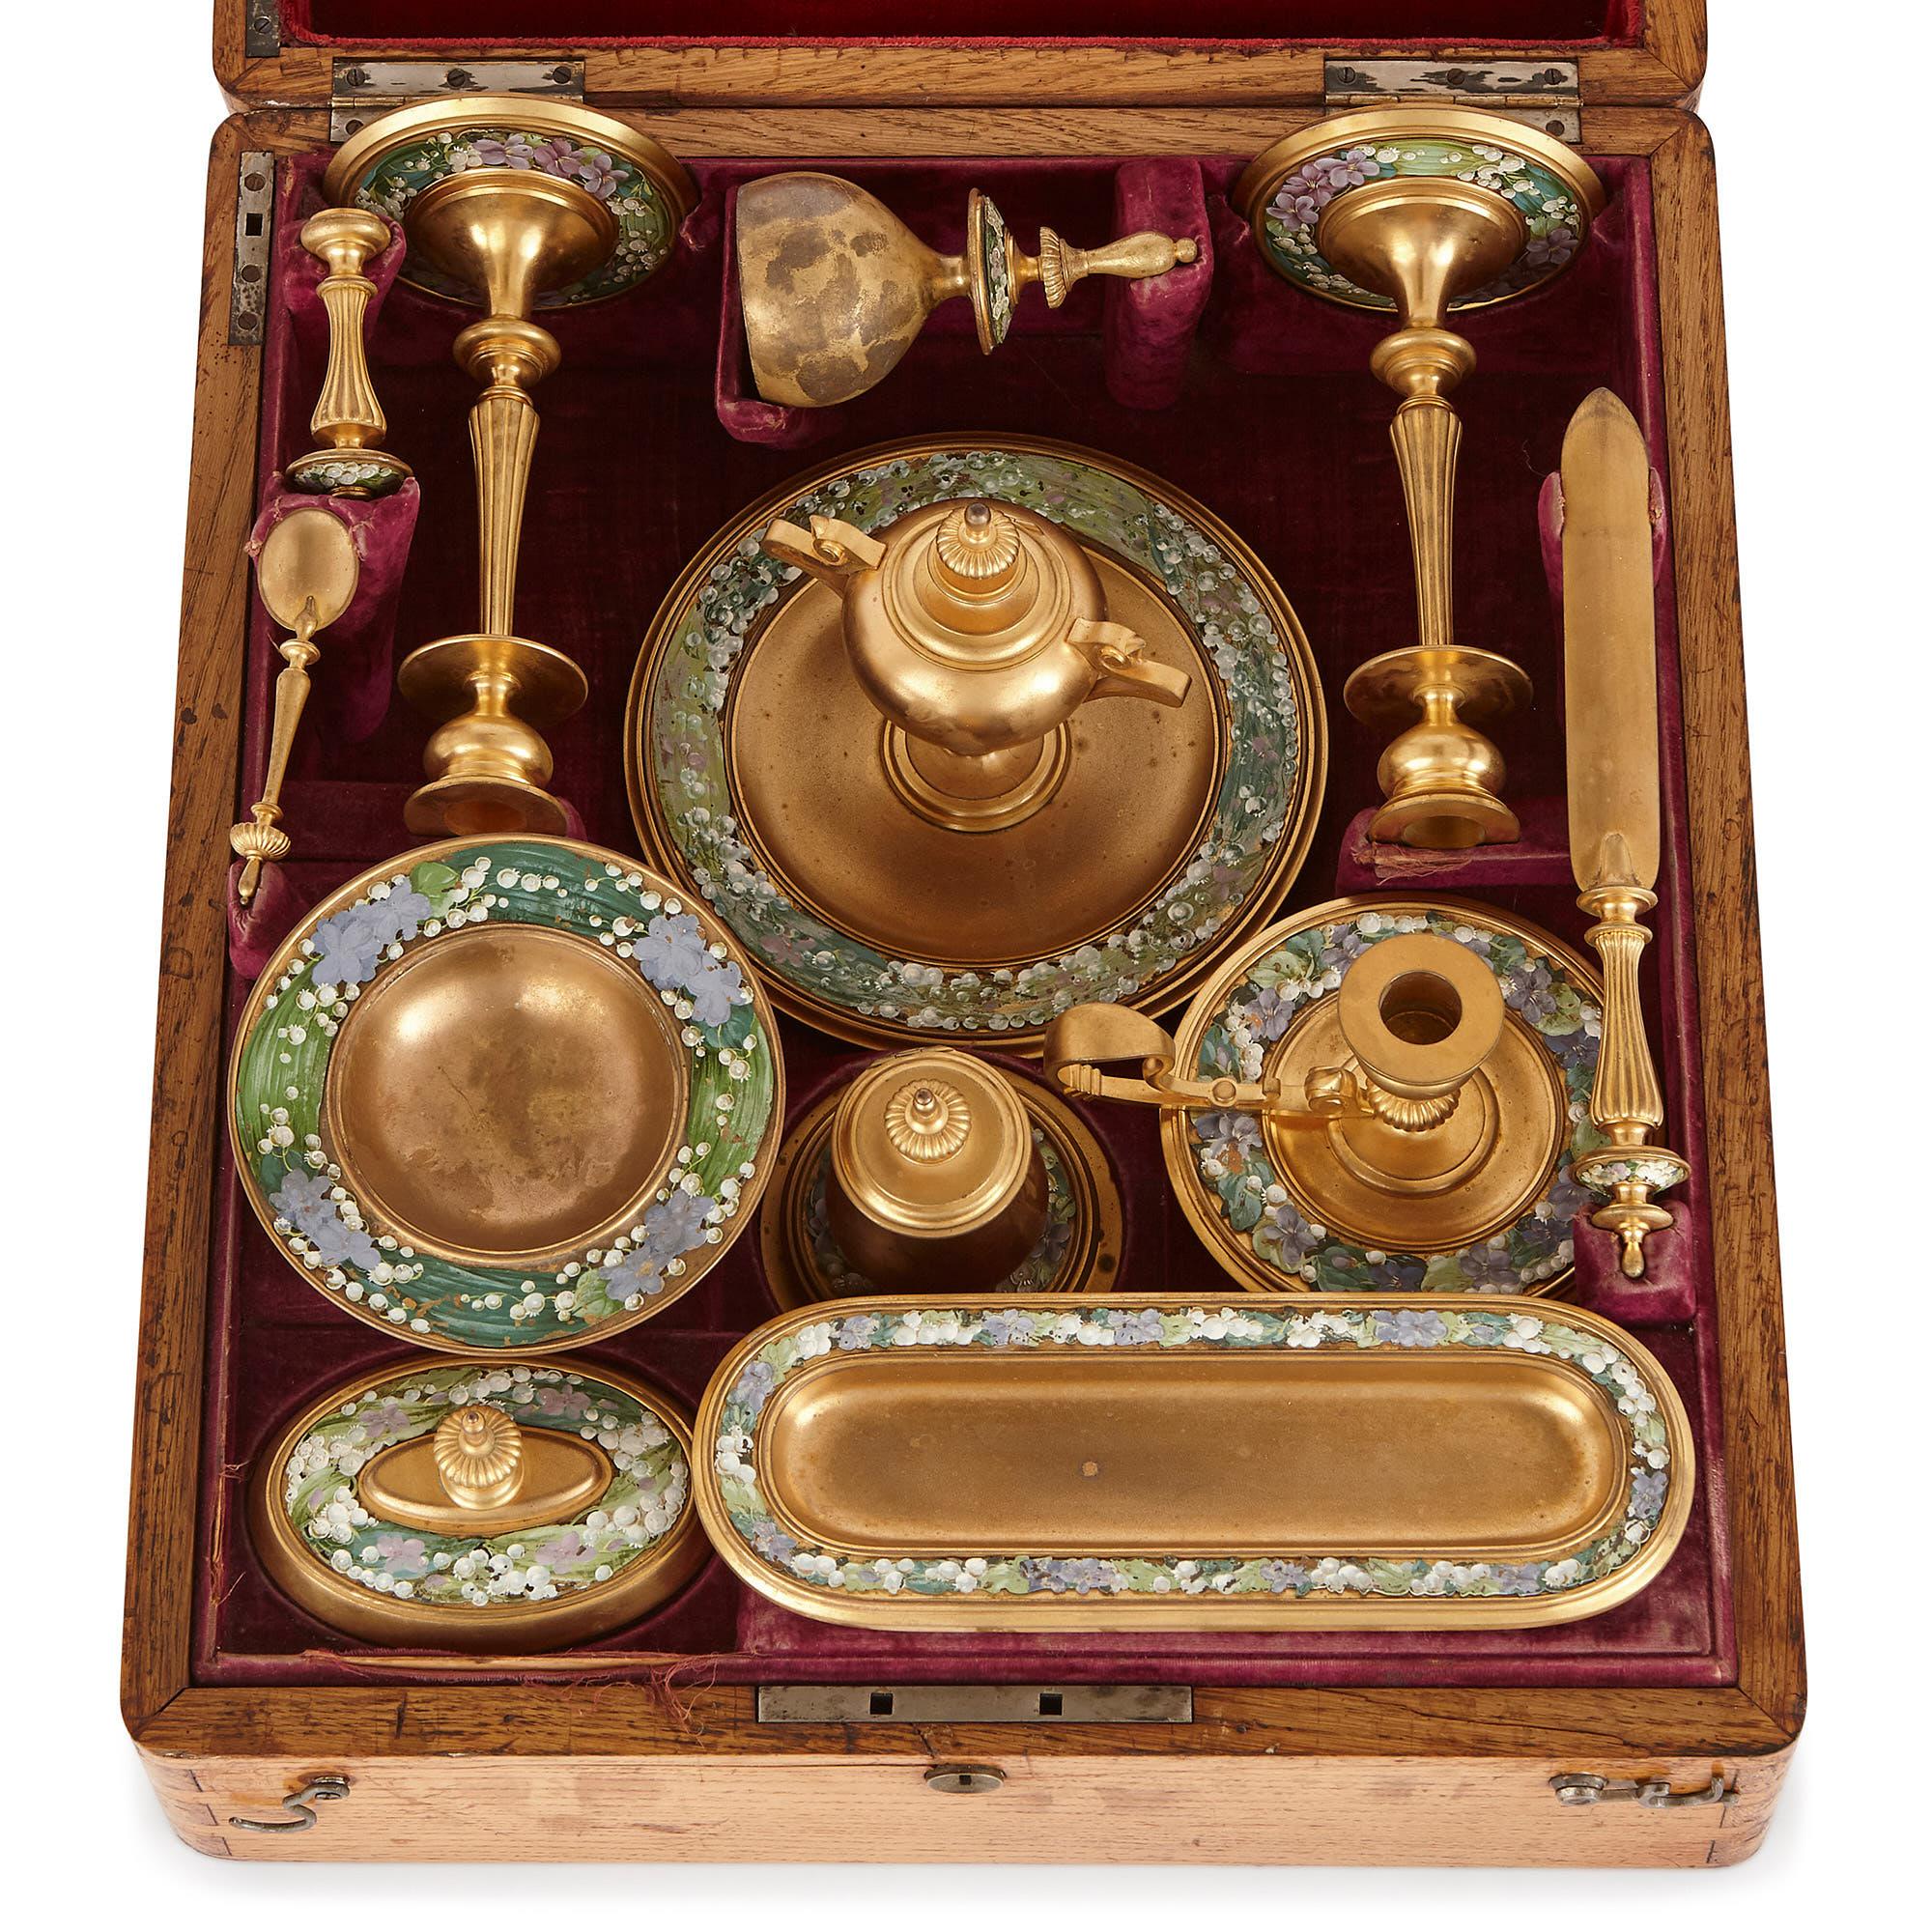 19th century accessories